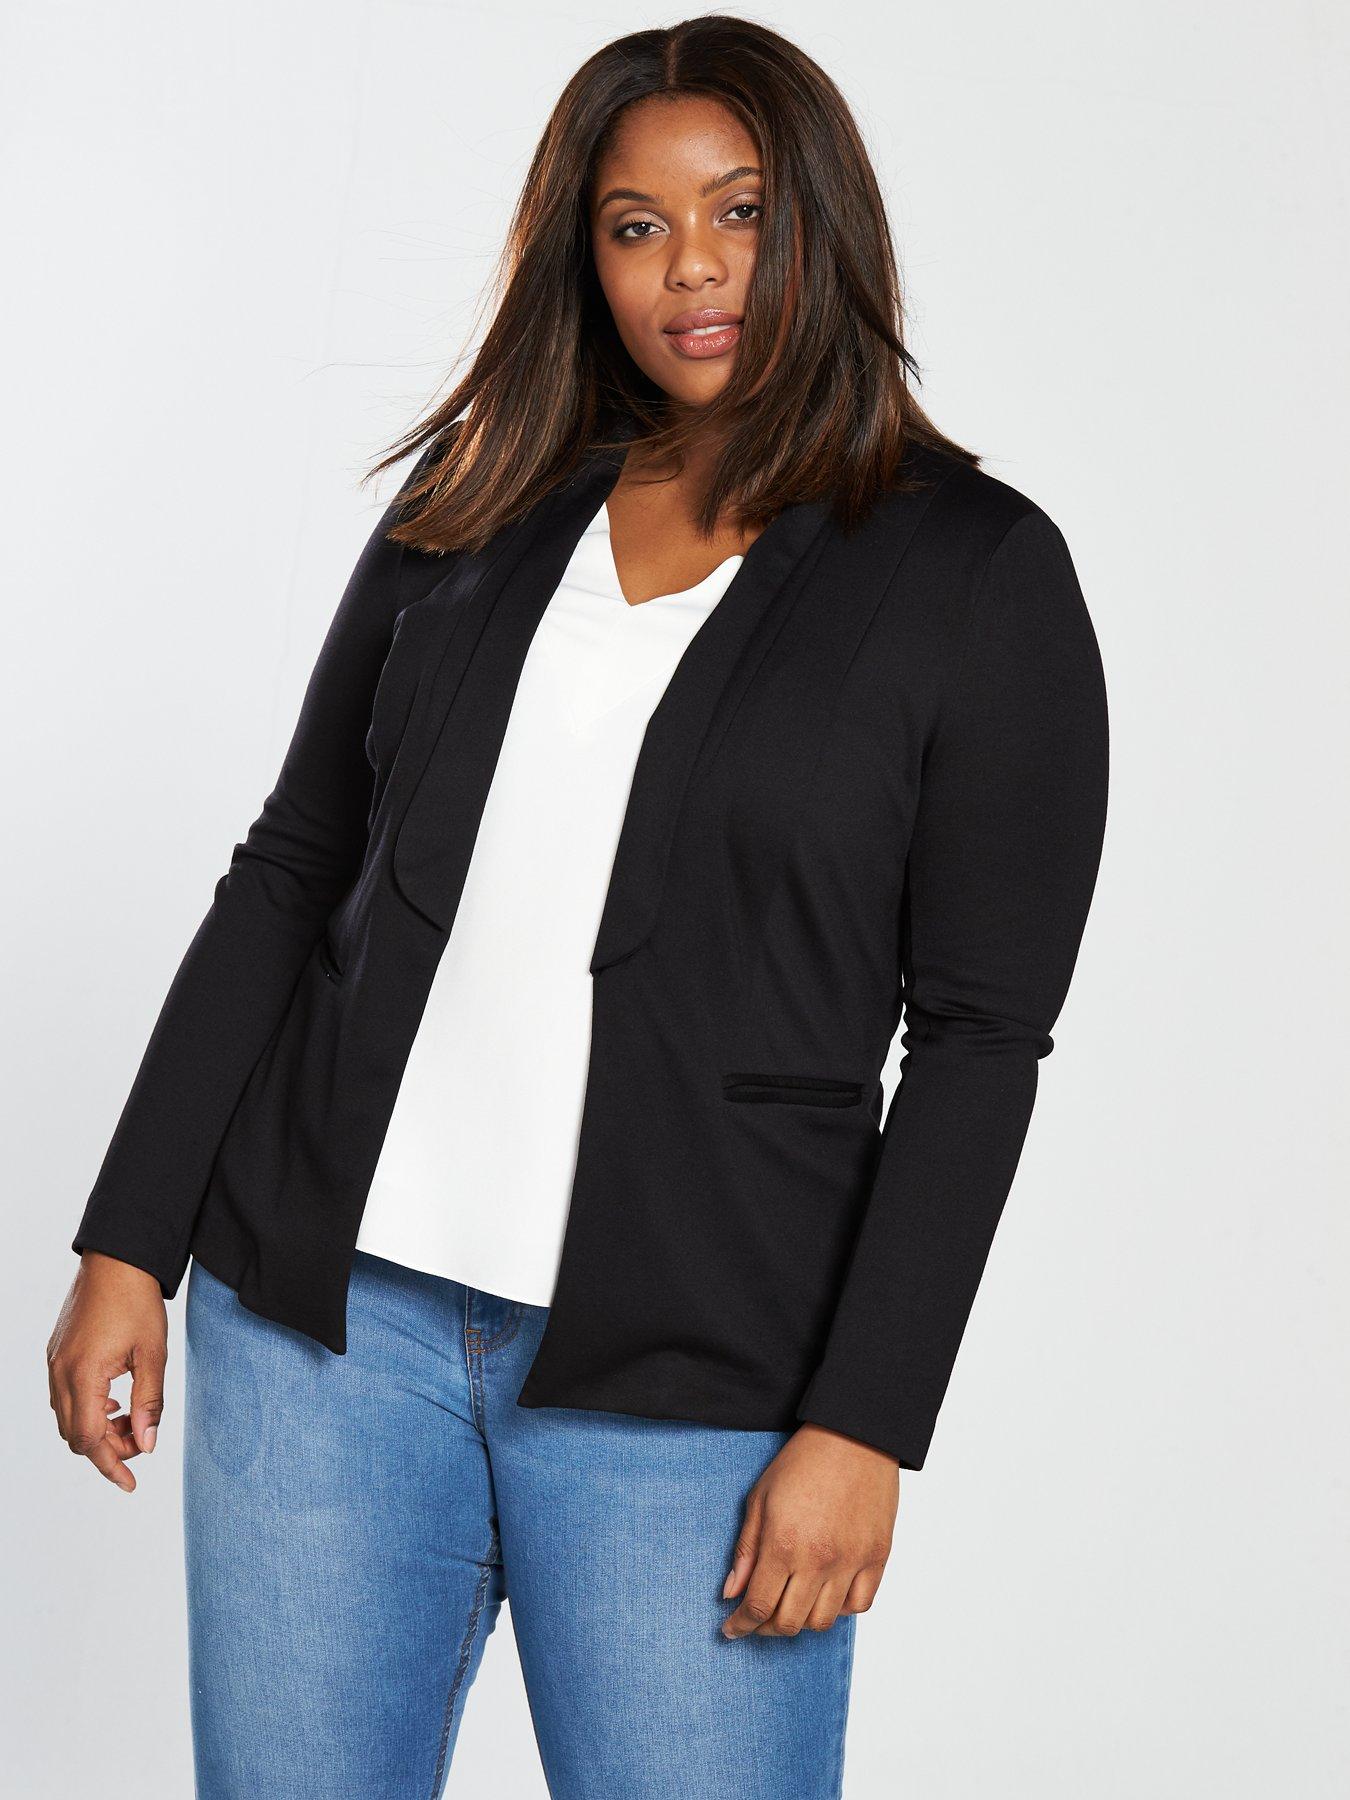 Plus Size | Coats \u0026 jackets | Women 